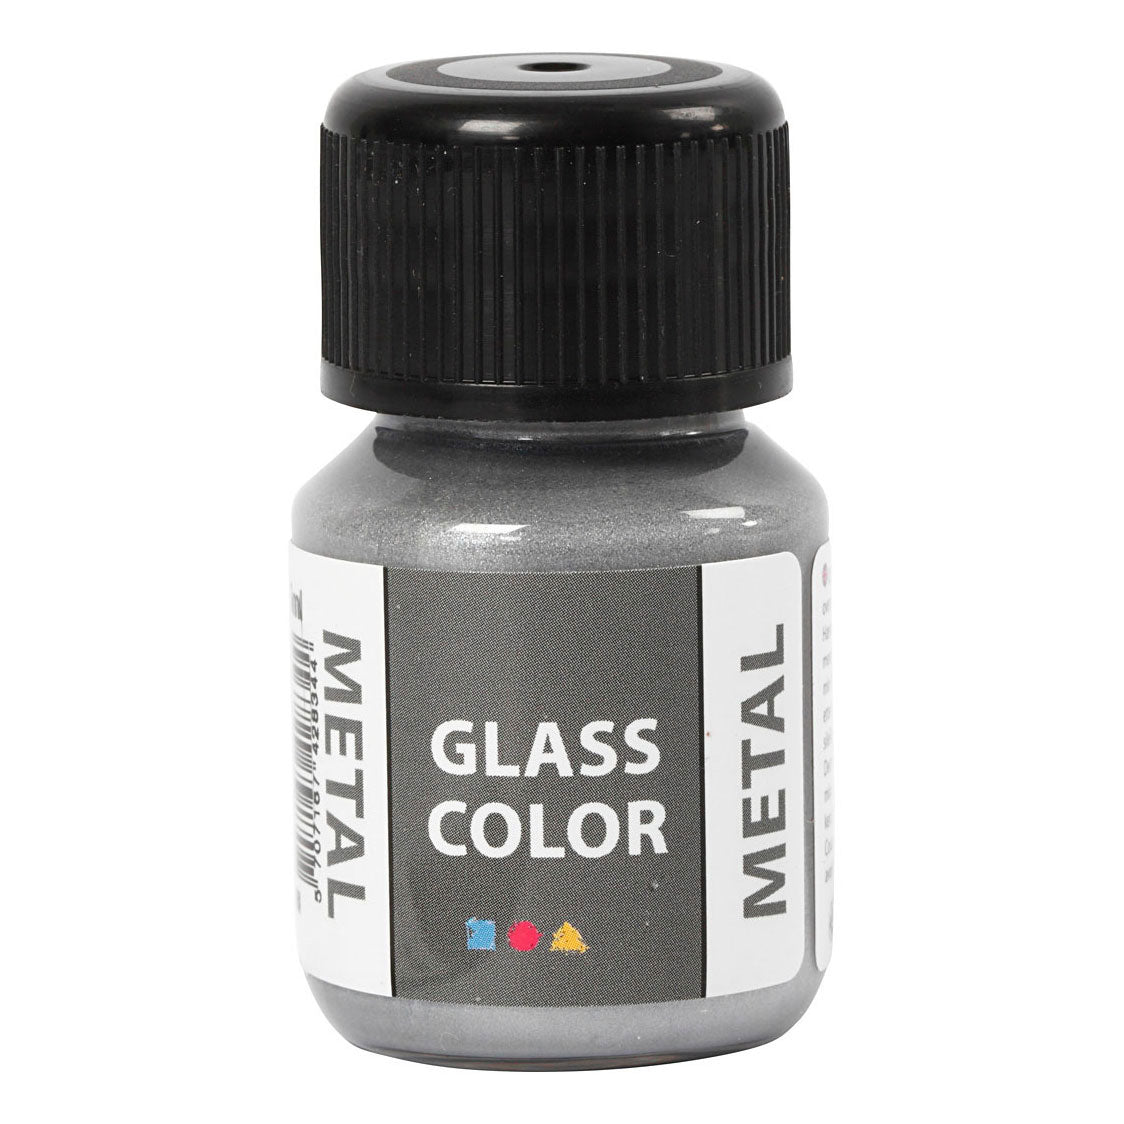 Creativ Company Glass Color Metal Paint Argento, 30ml